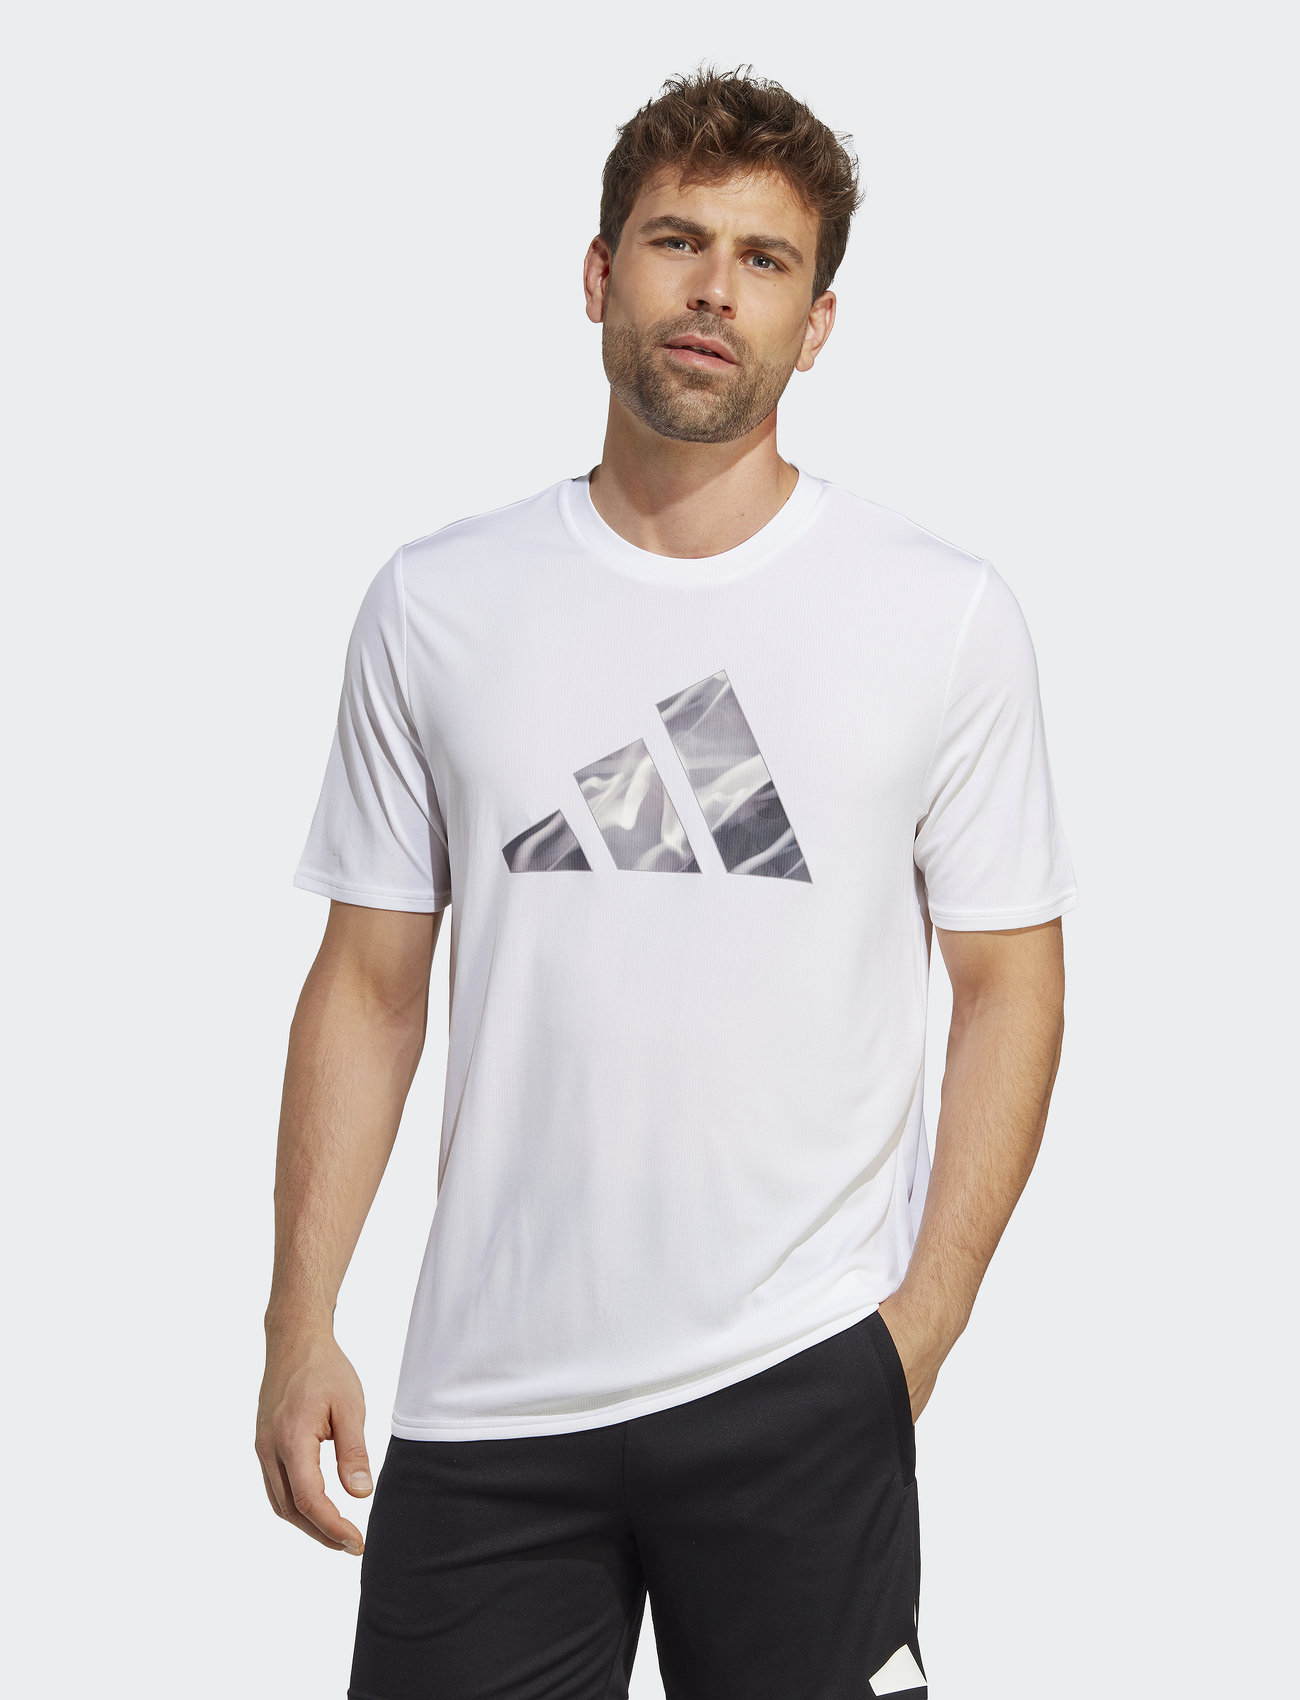 Acheter T-shirt Adidas D4M Hiit Gfx Homme IB7925